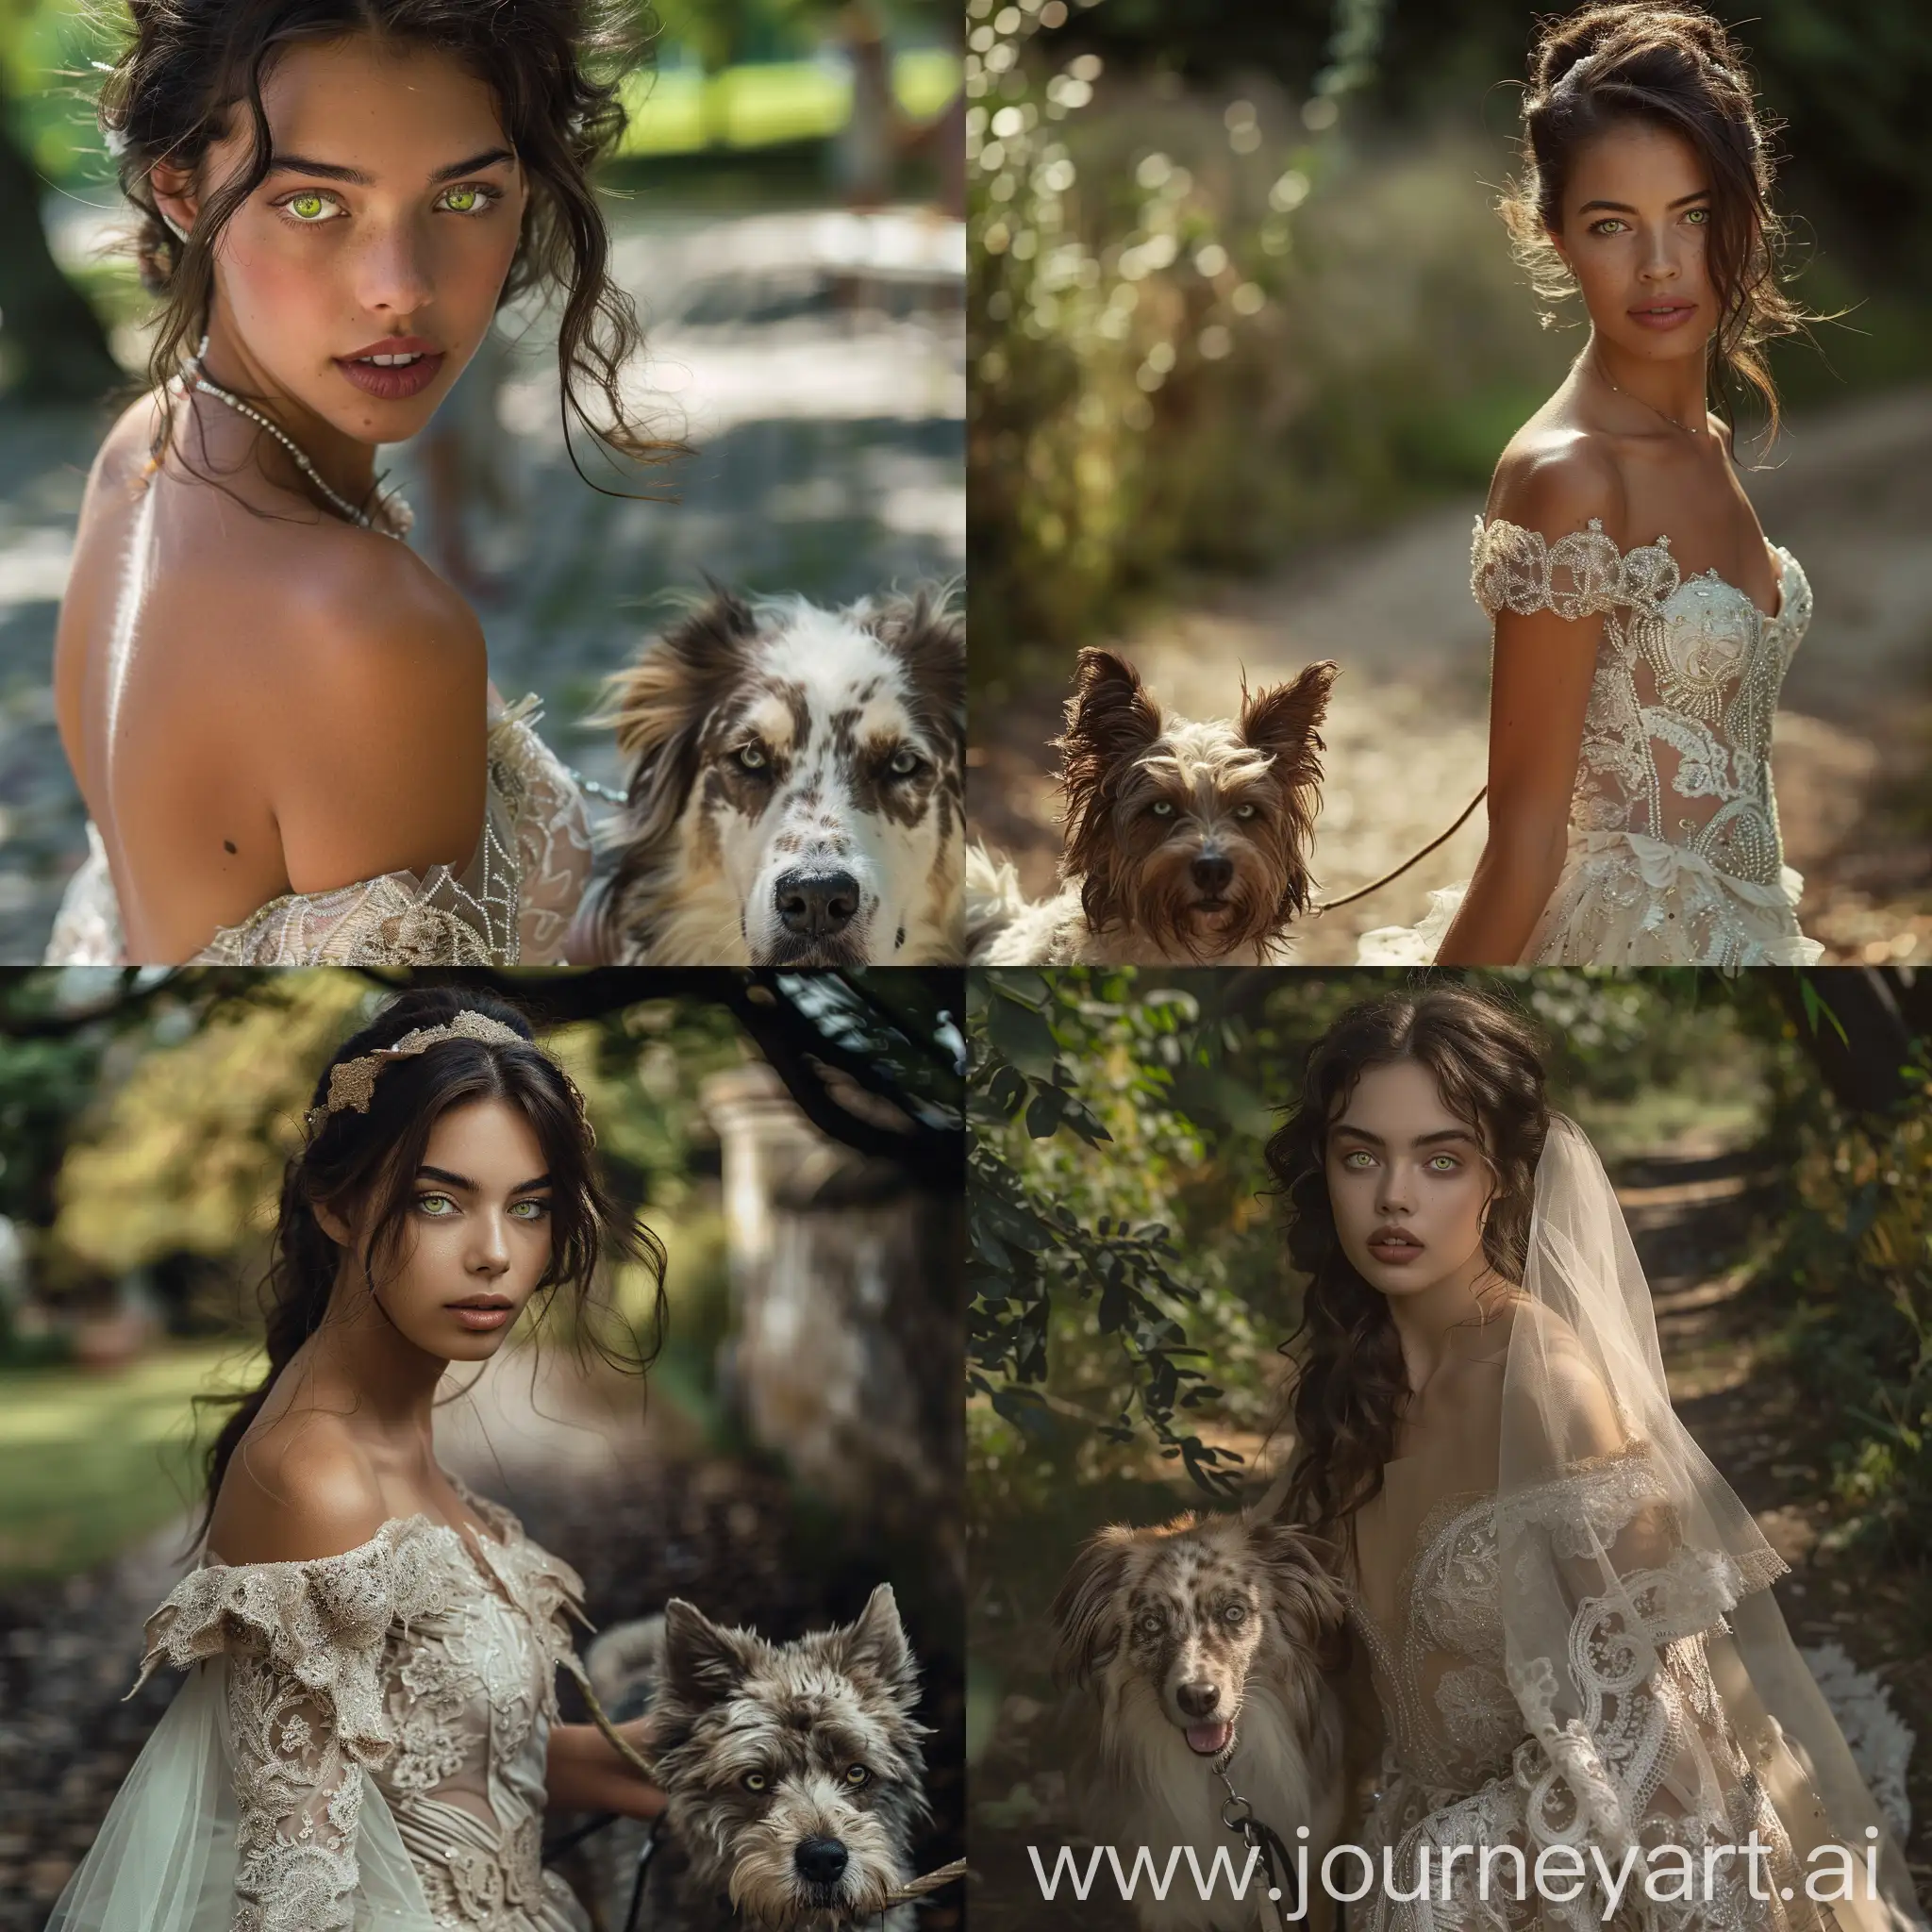 Brunette-Bride-Walking-Dog-Elegant-Wedding-Portrait-with-Sony-ariii-Camera